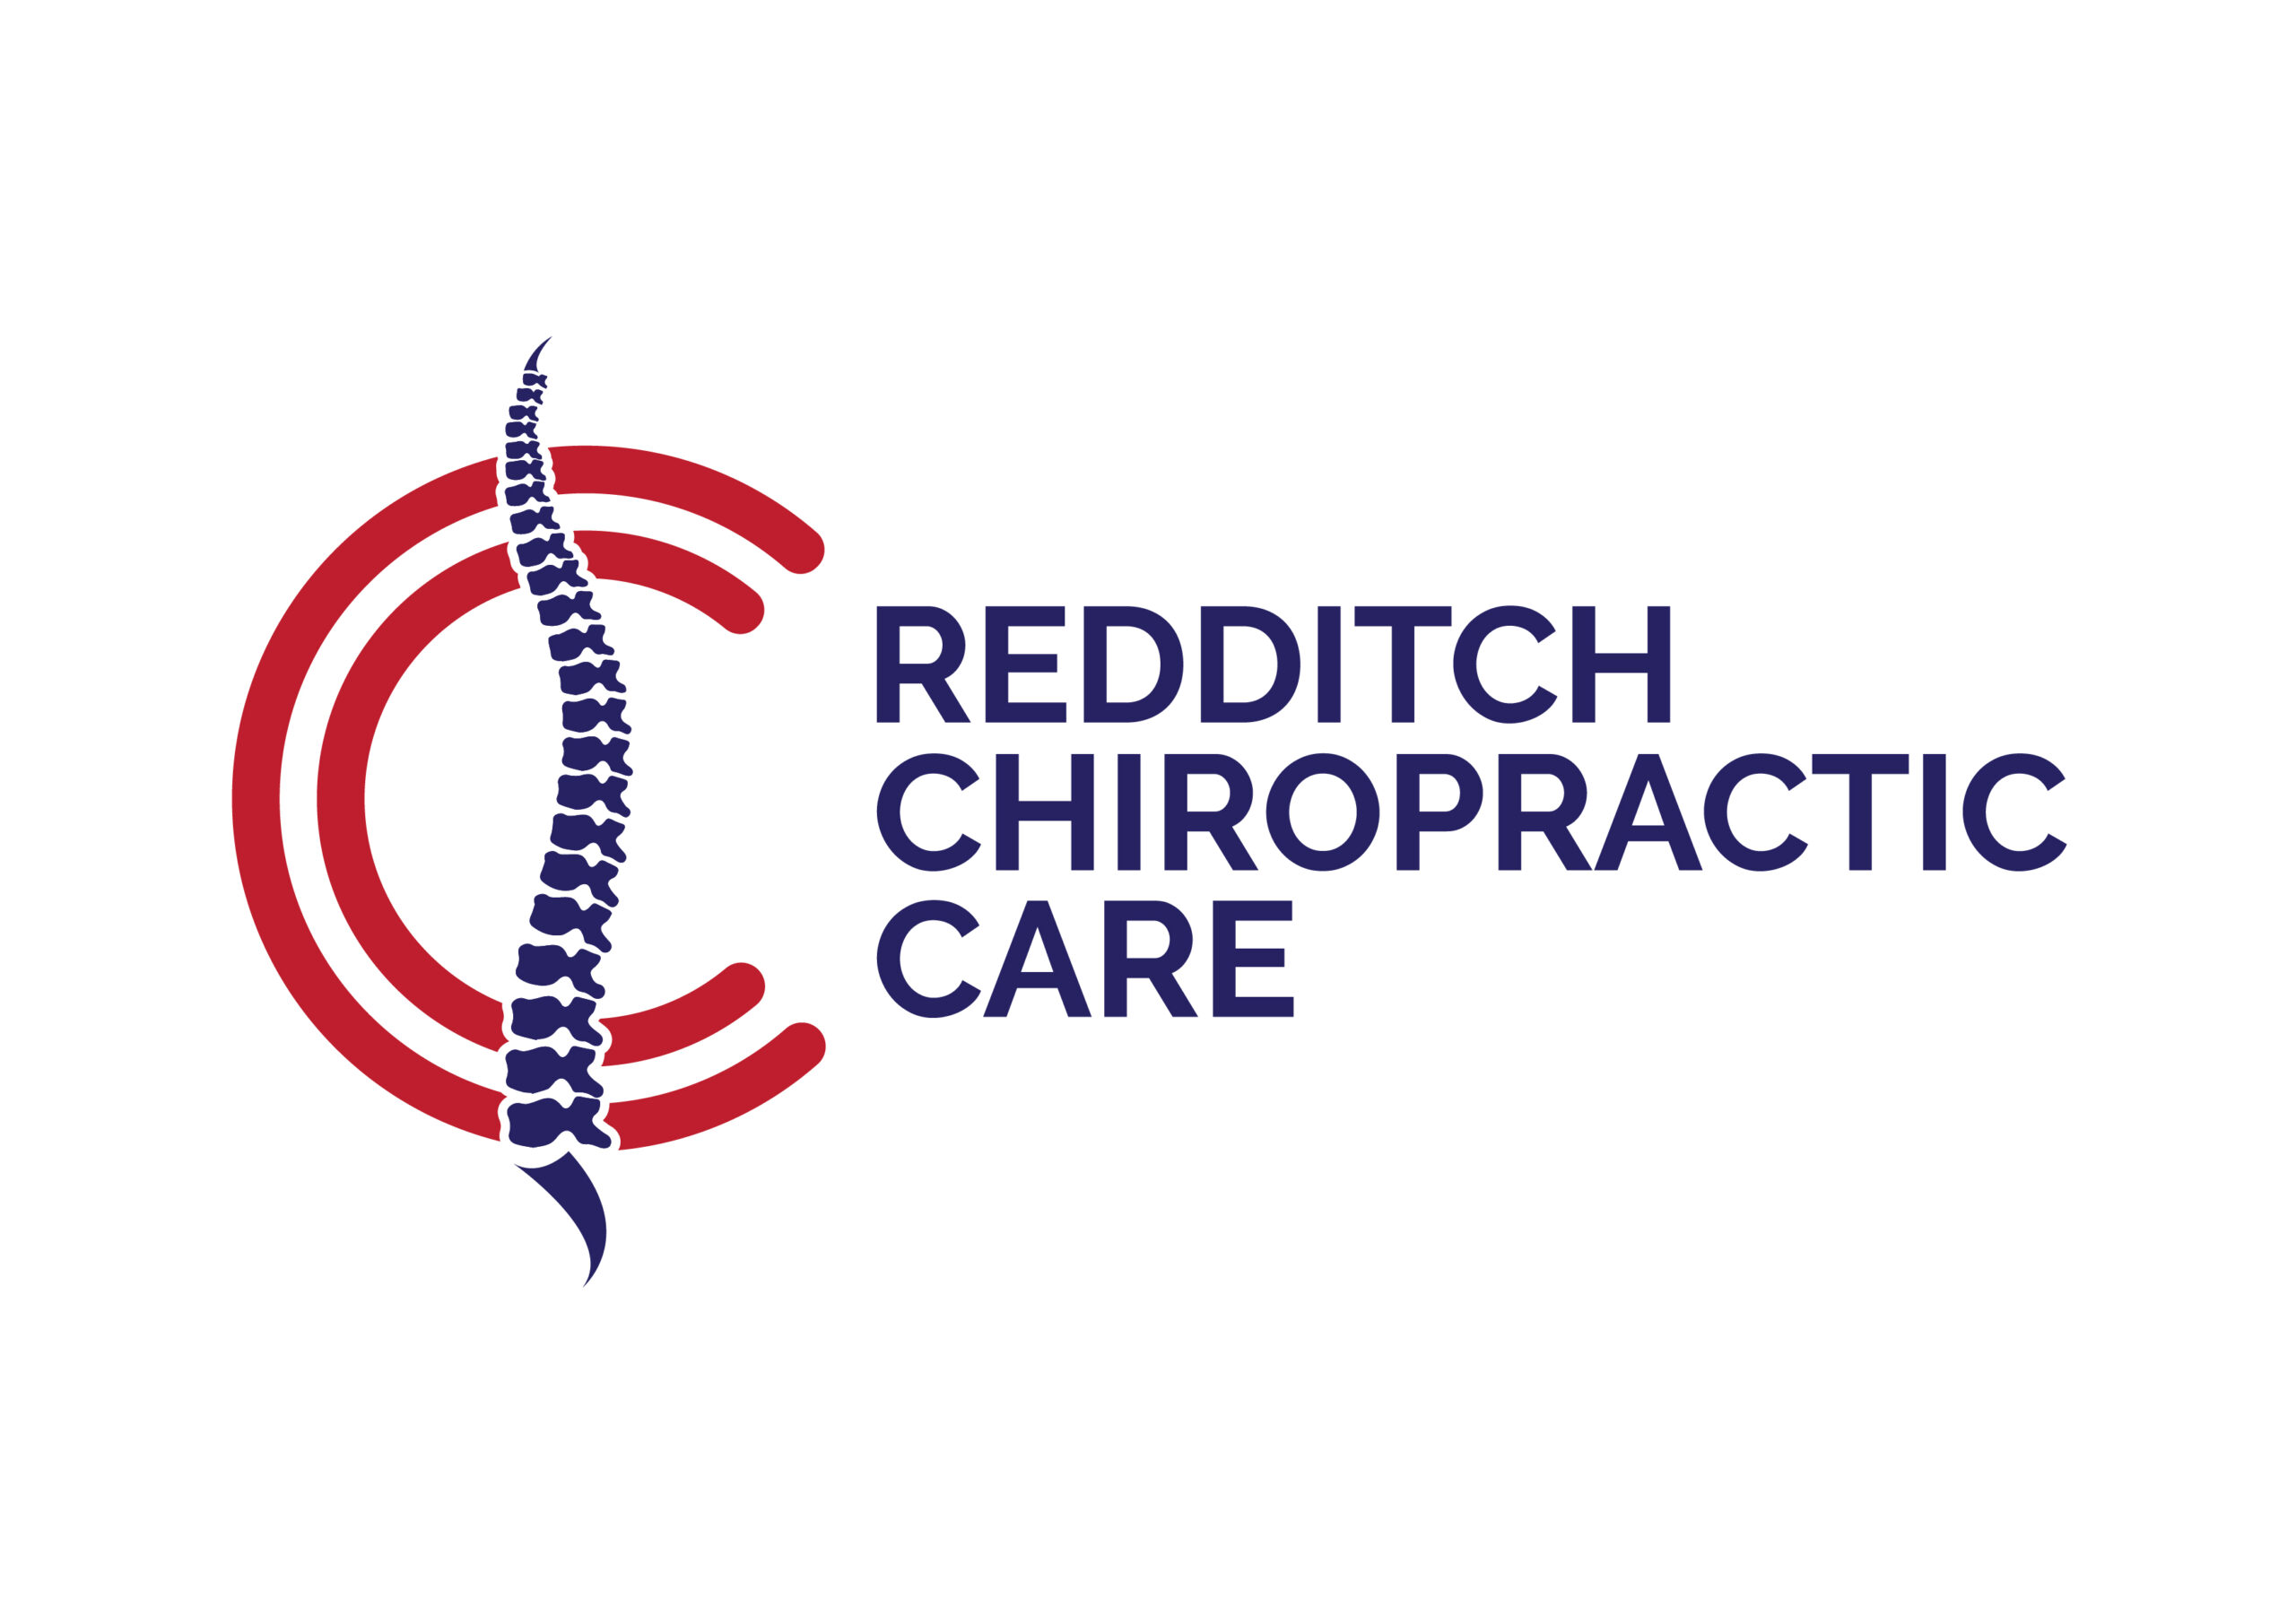 Redditch Chiropractic Care logo